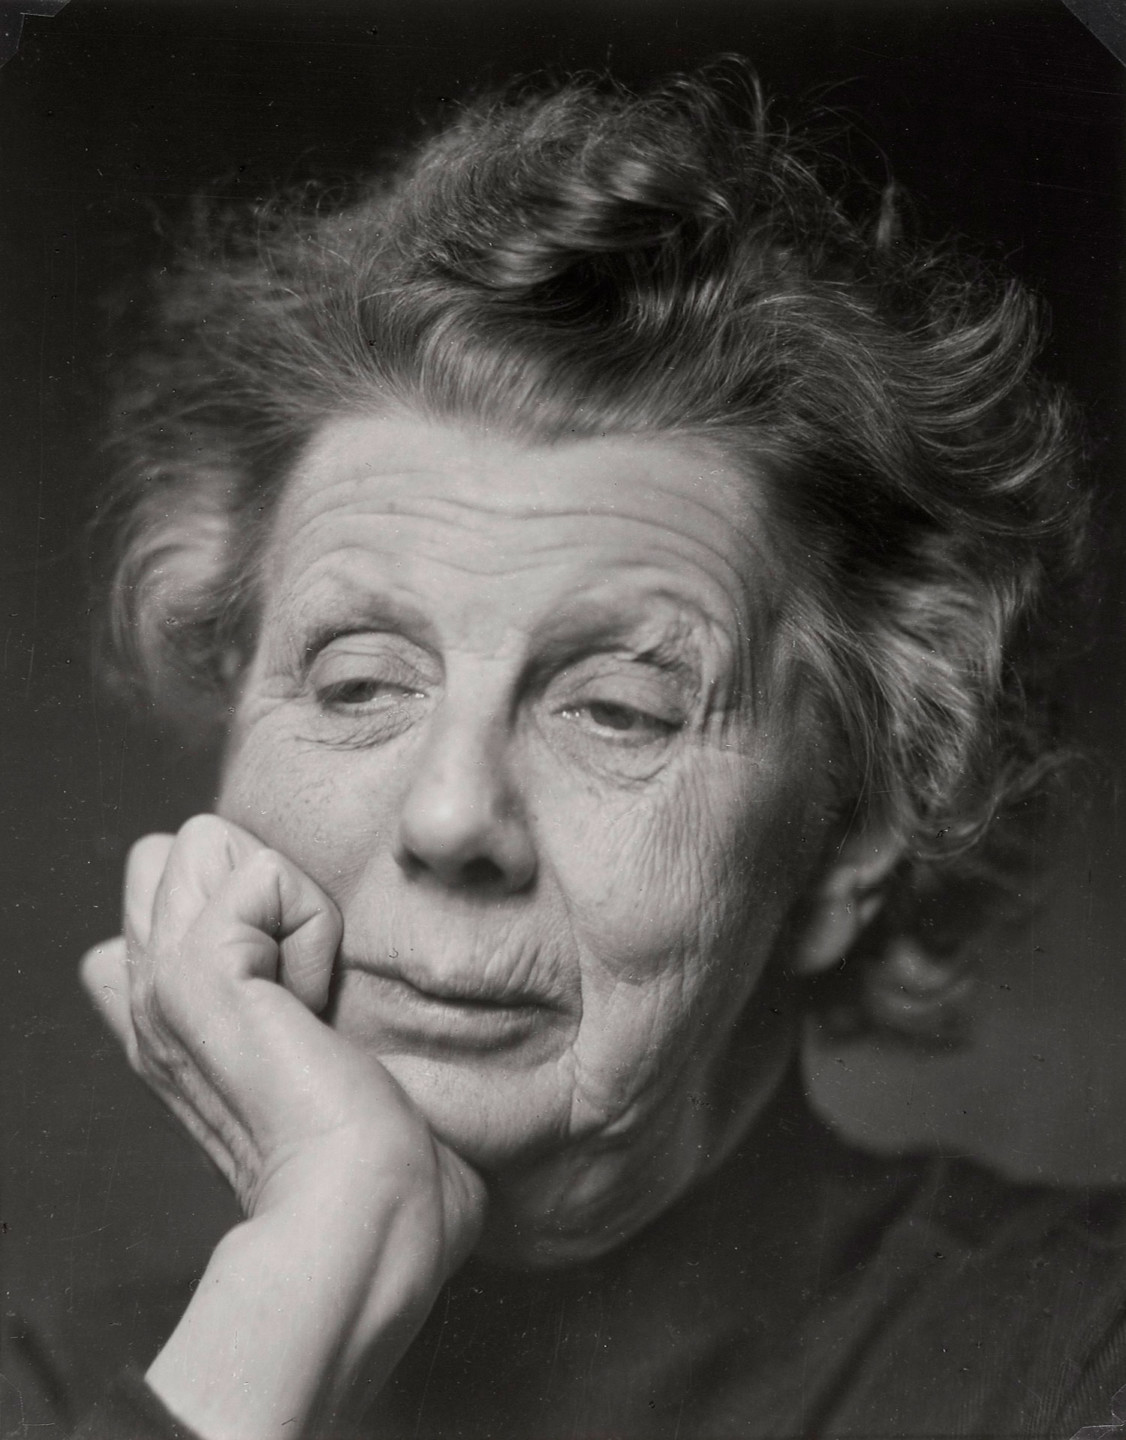 A portrait of the artist Vera Nilsson by photographer Anna Riwkin